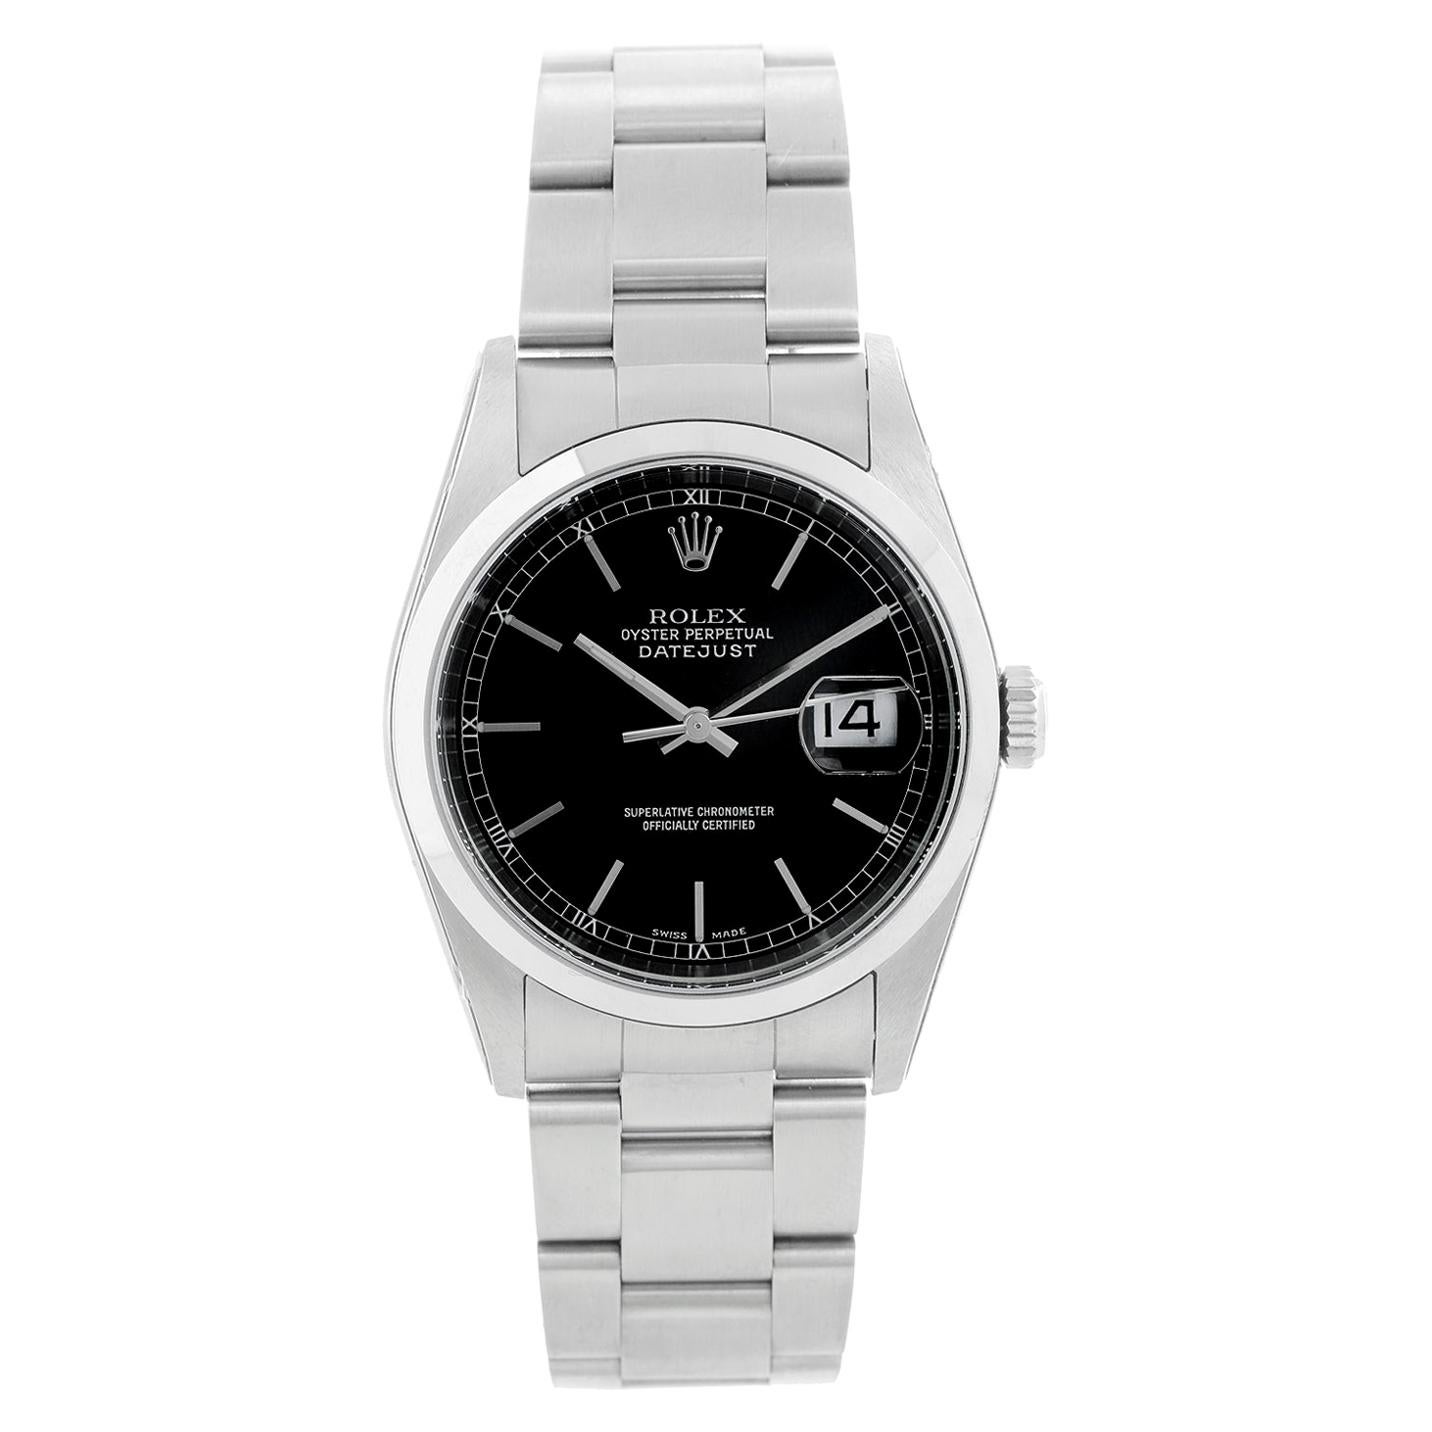 Collectors Edition Rolex Datejust Men's Stainless Steel Watch 16200